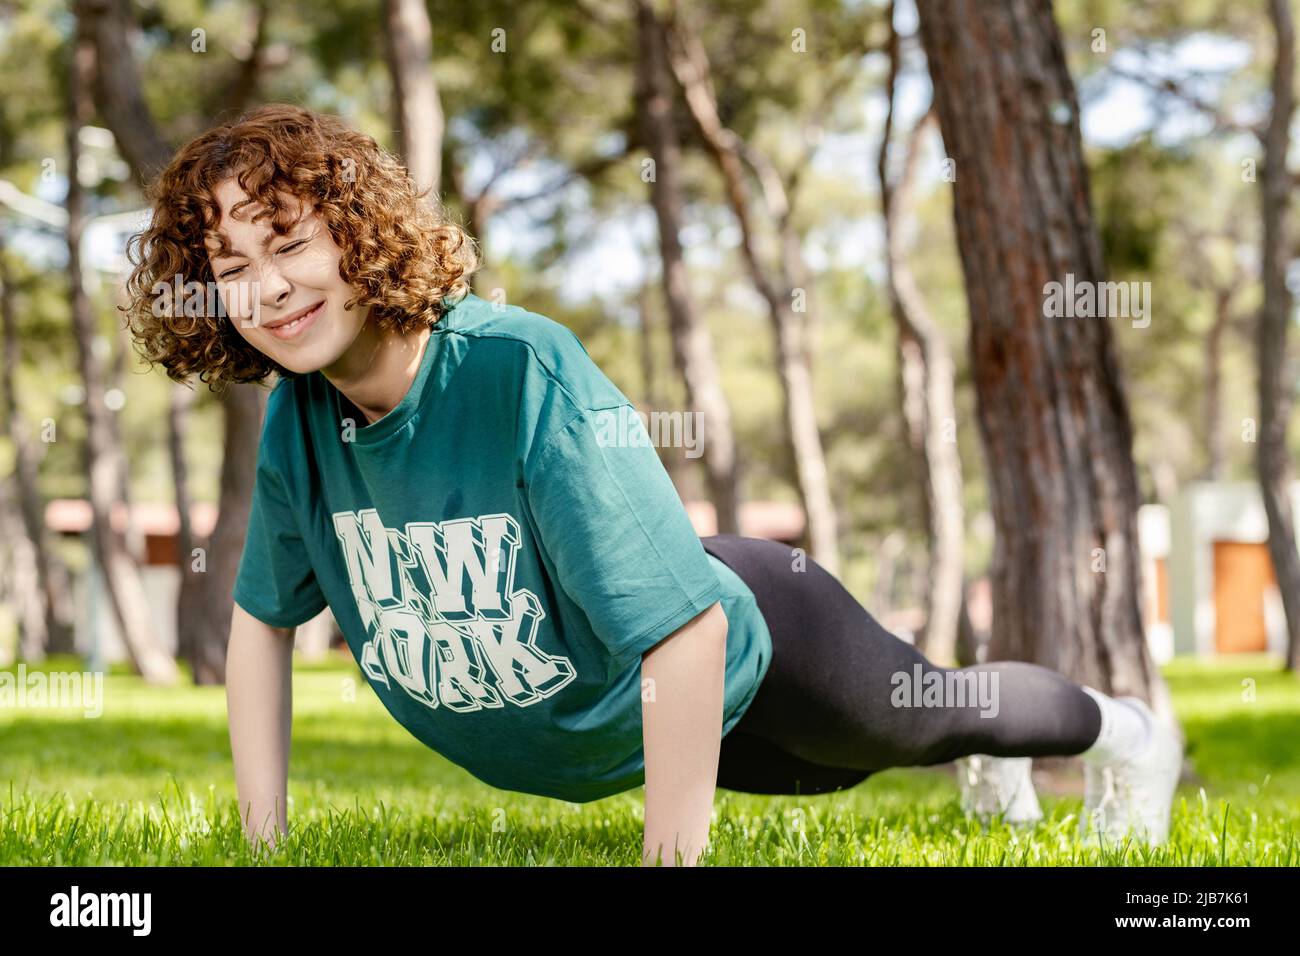 Cute redhead woman wearing green sports bra and blue yoga pants